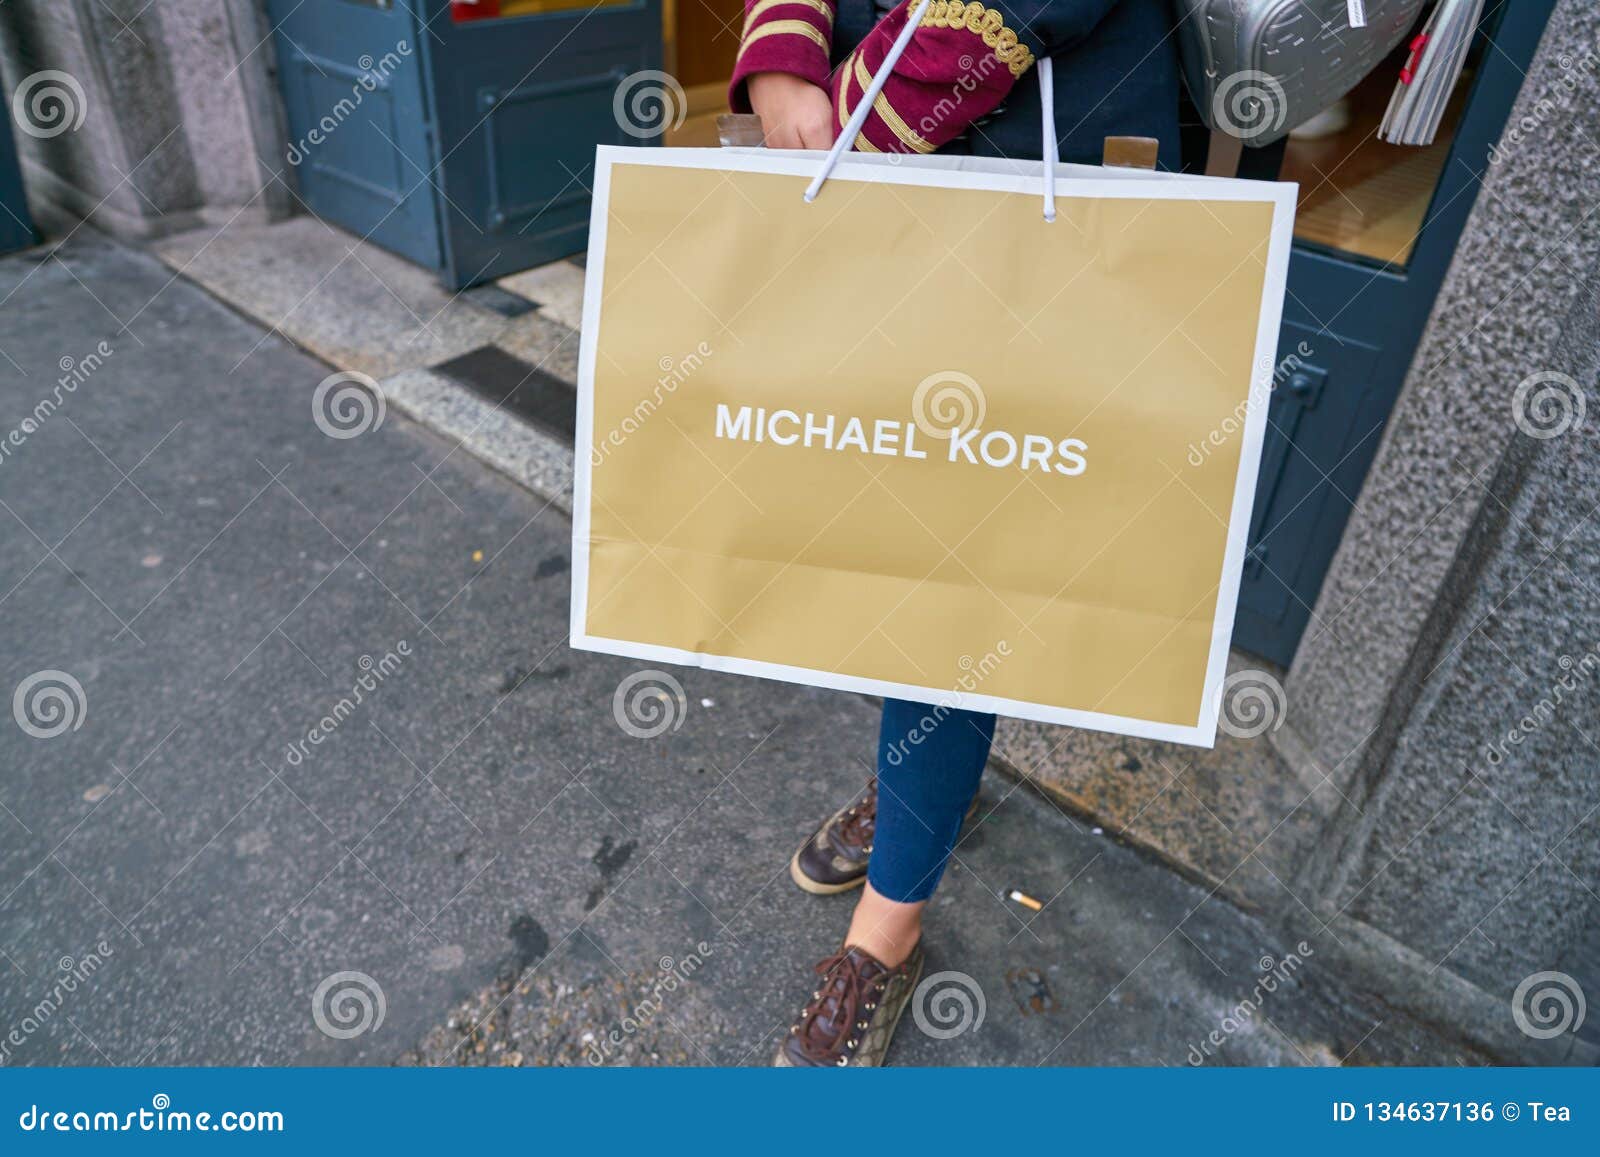 shopping bag michael kors outlet